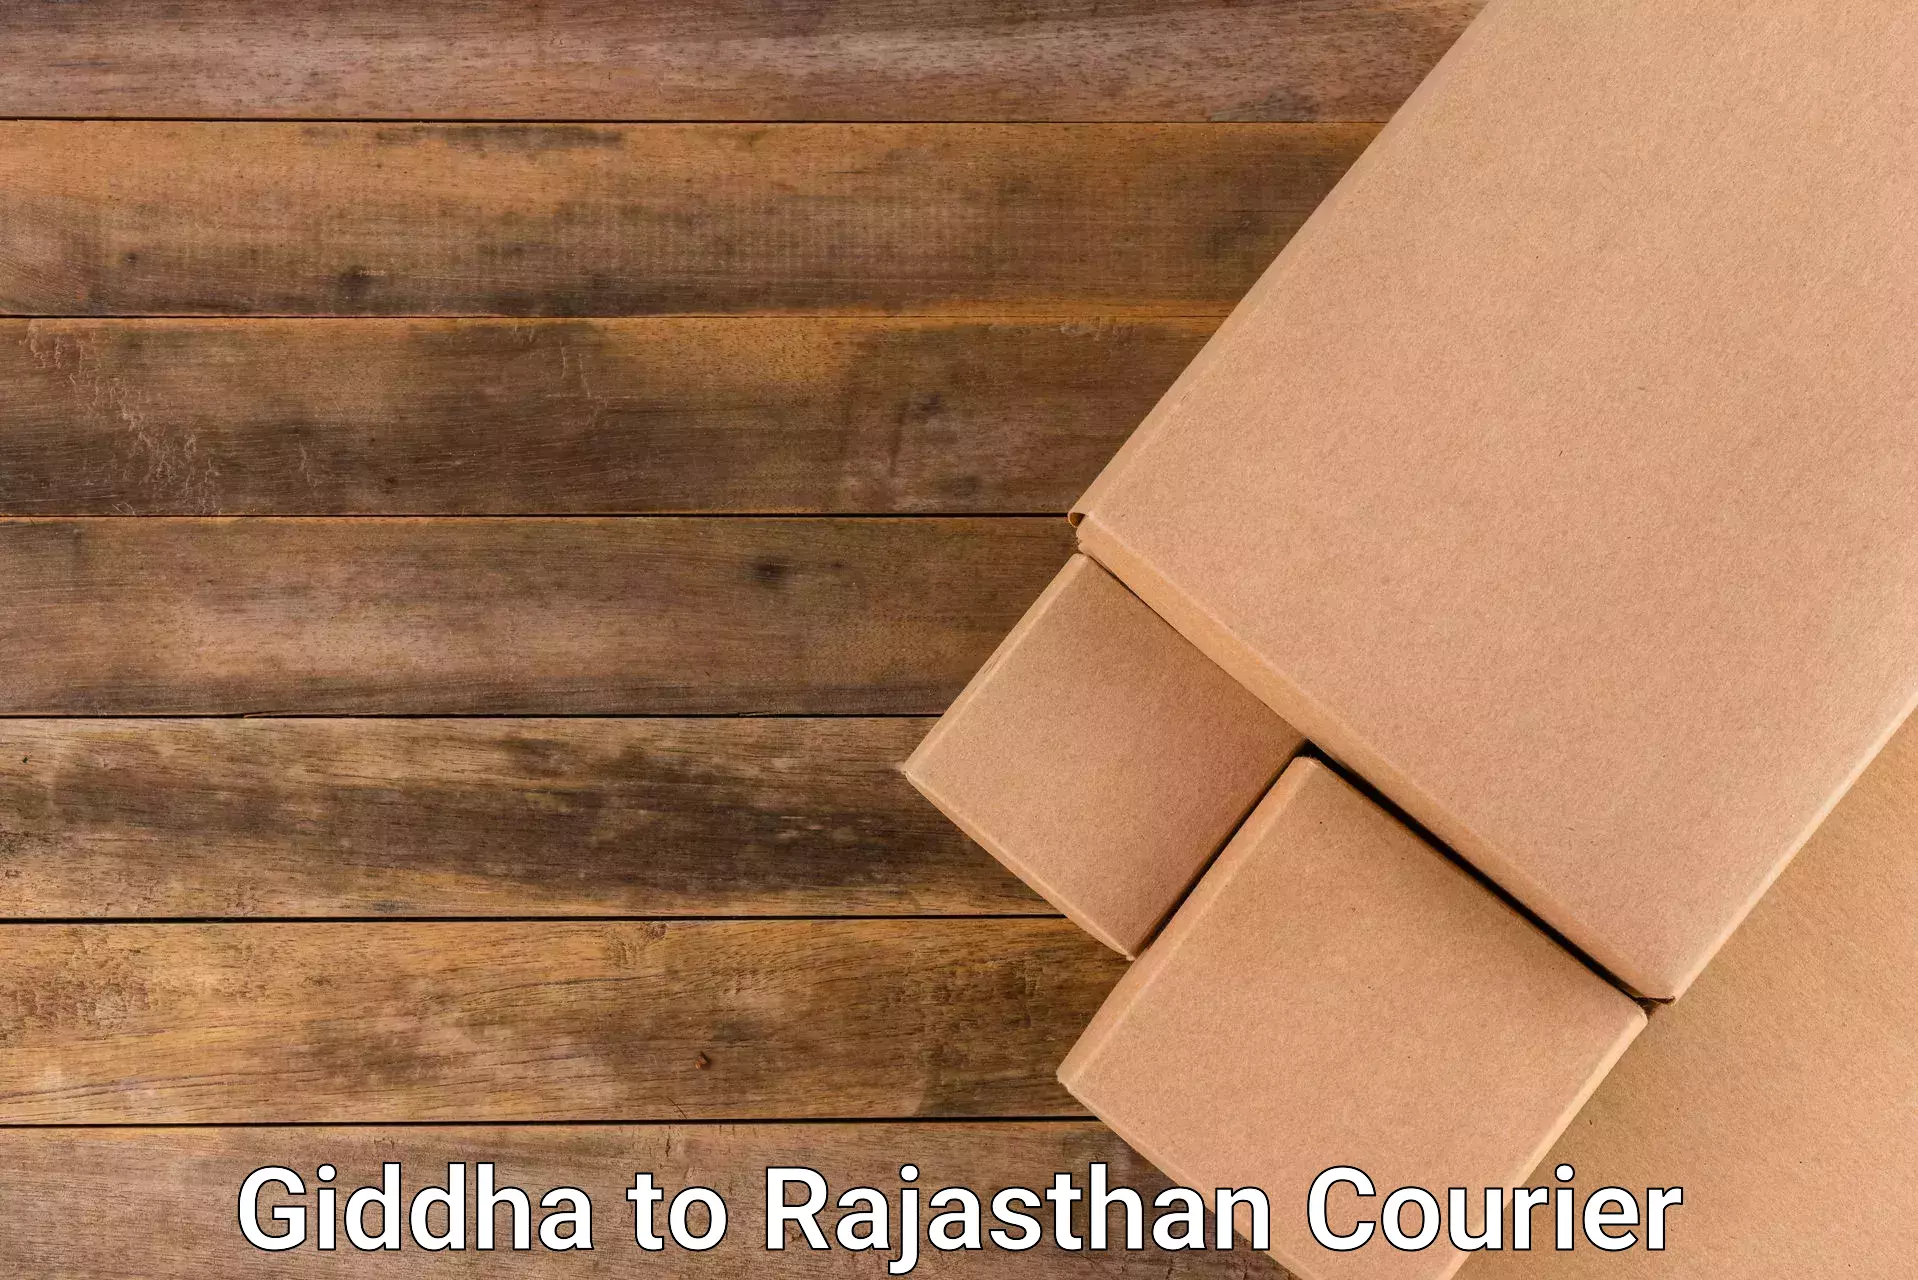 24/7 courier service in Giddha to Viratnagar